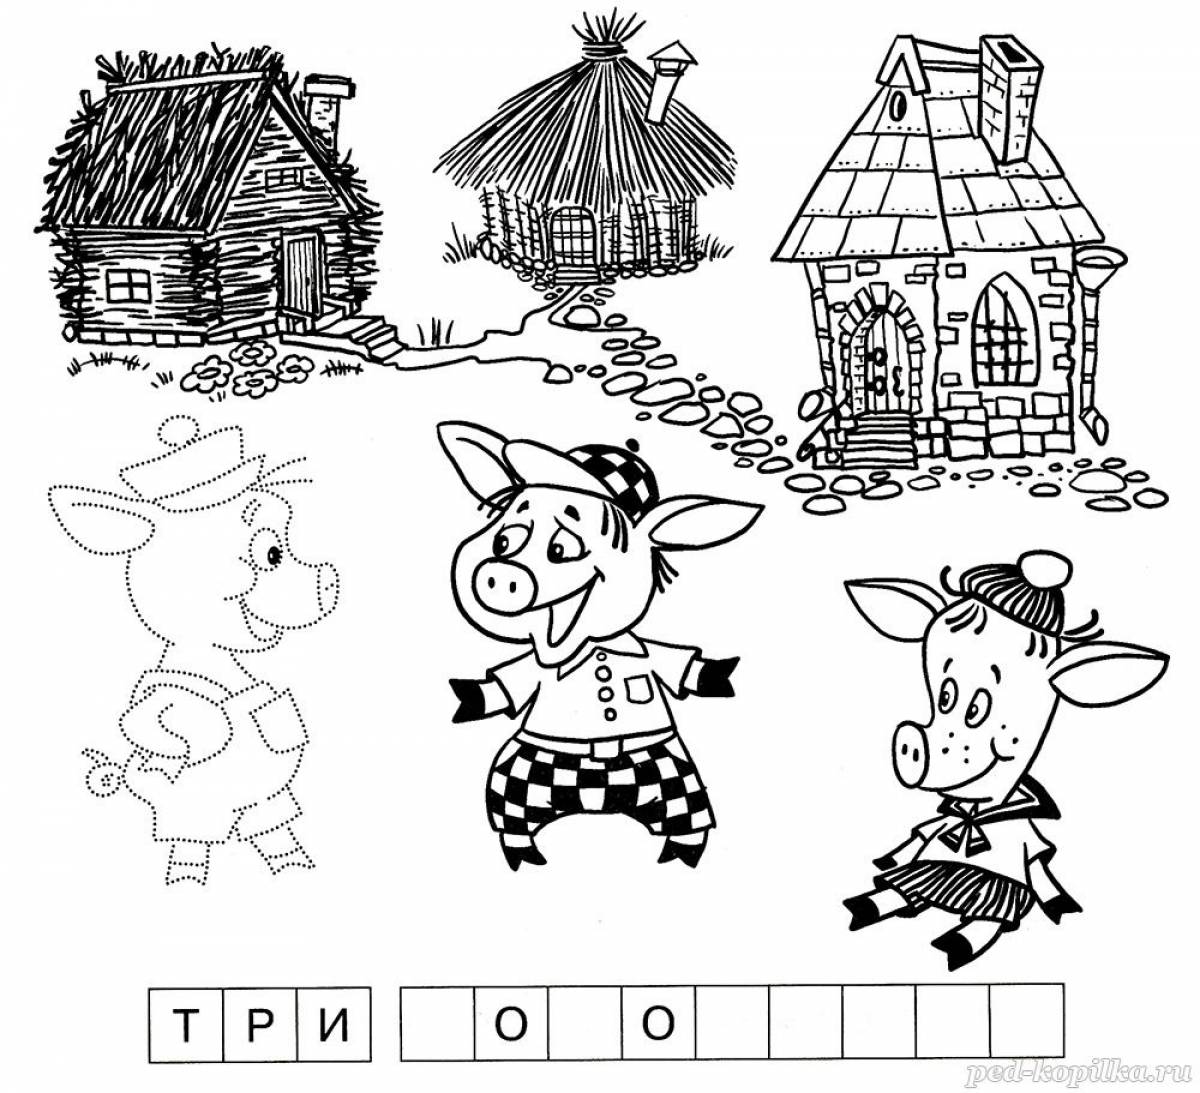 Three little pigs crossword